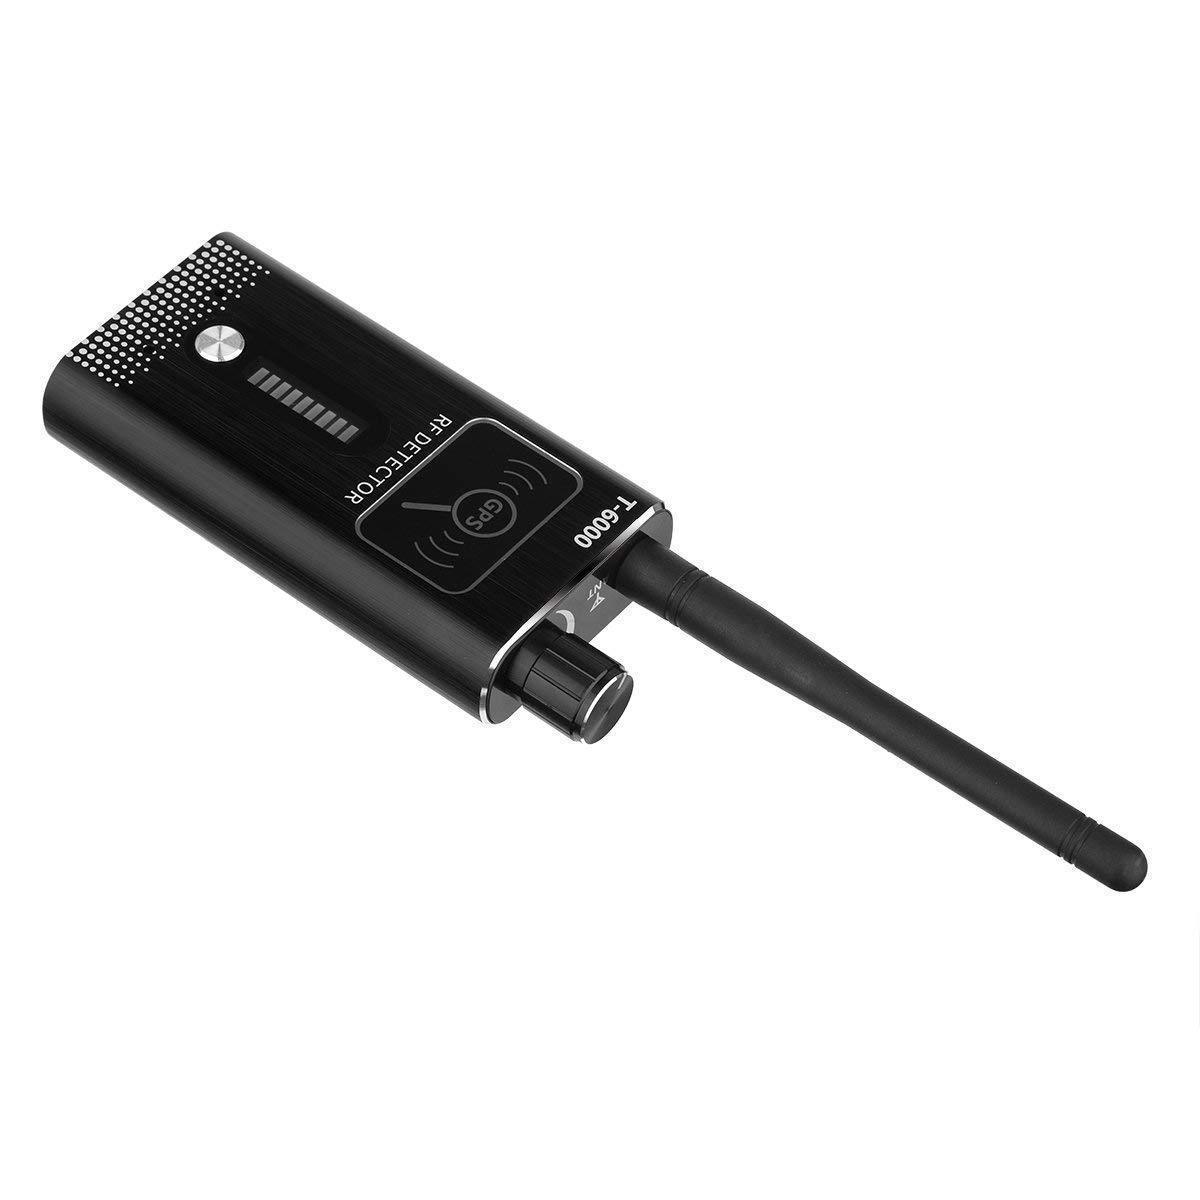 T-6000 Details about  Anti-Spy GPS Signal Lens RF Tracker Hidden Camera GSM SPY Bug Detector